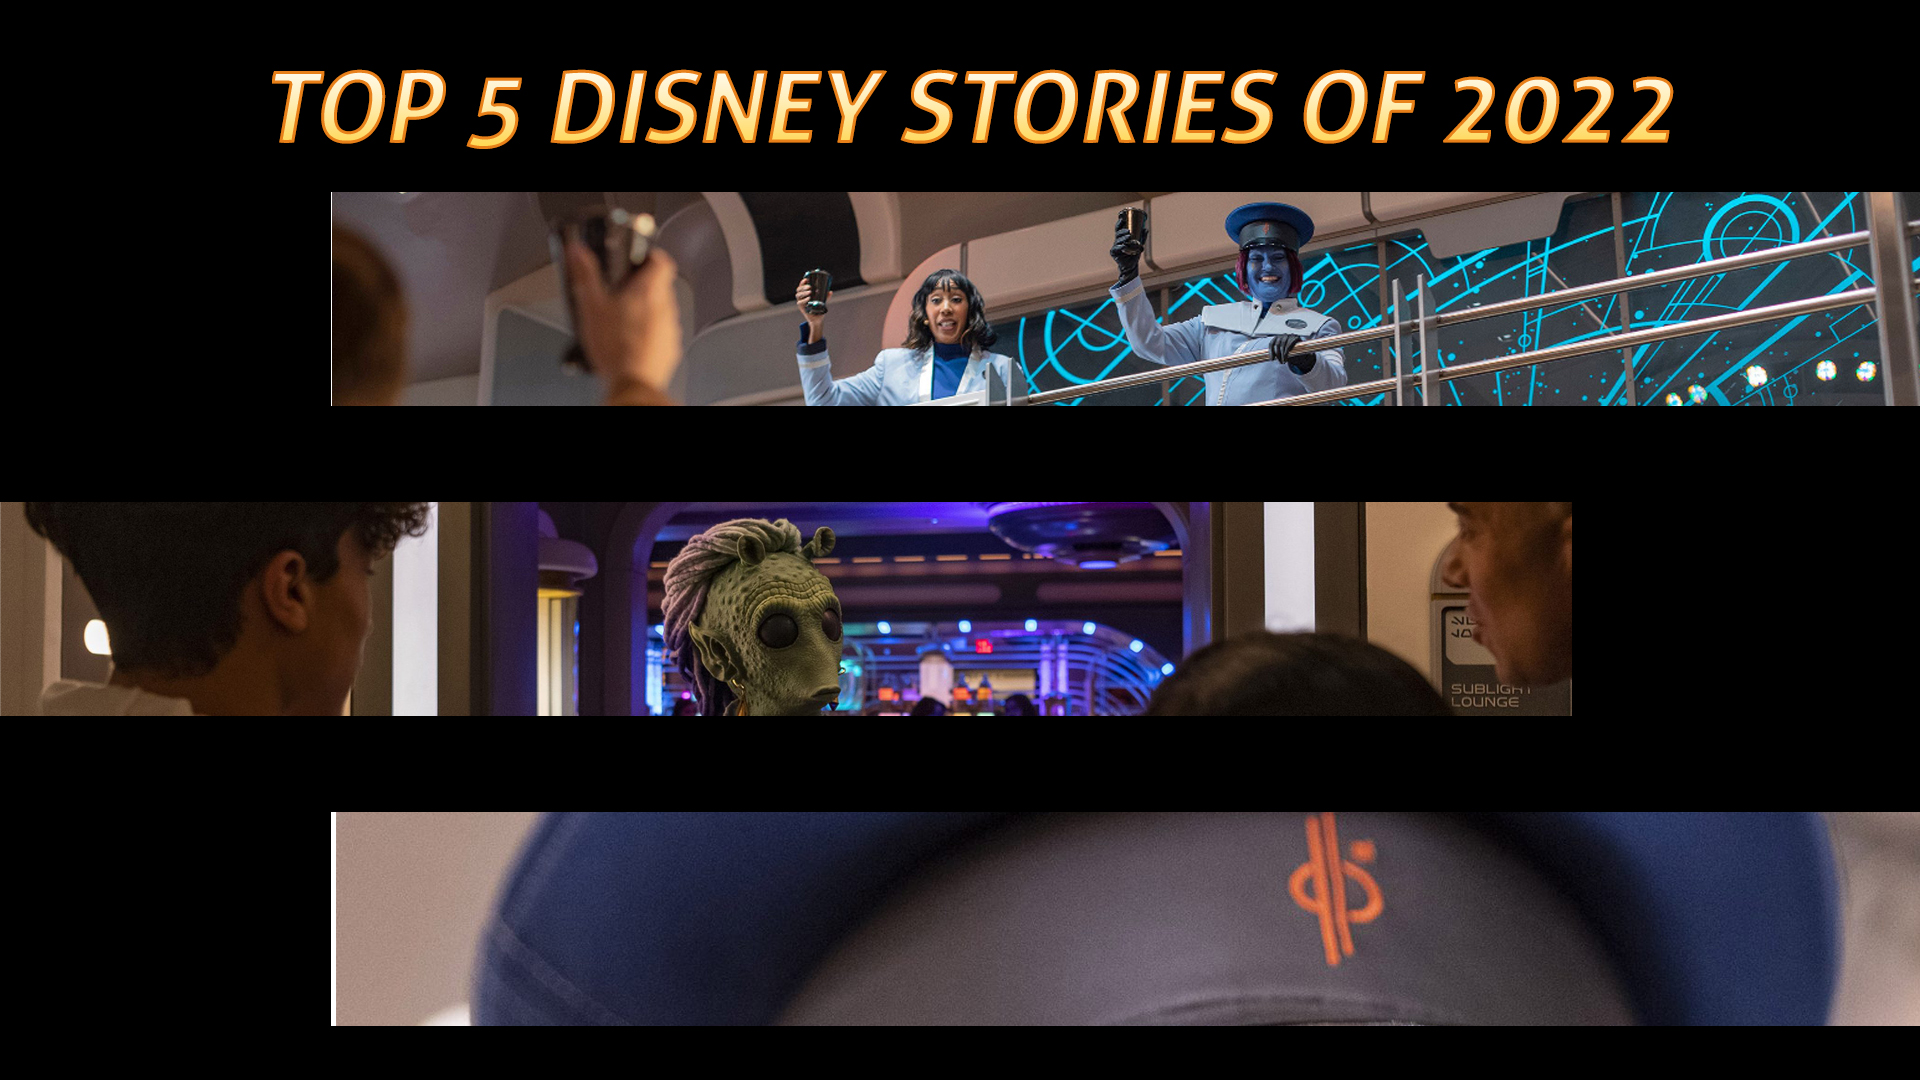 Top 5 Disney Stories of 2022: #5 Galactic Starcruiser